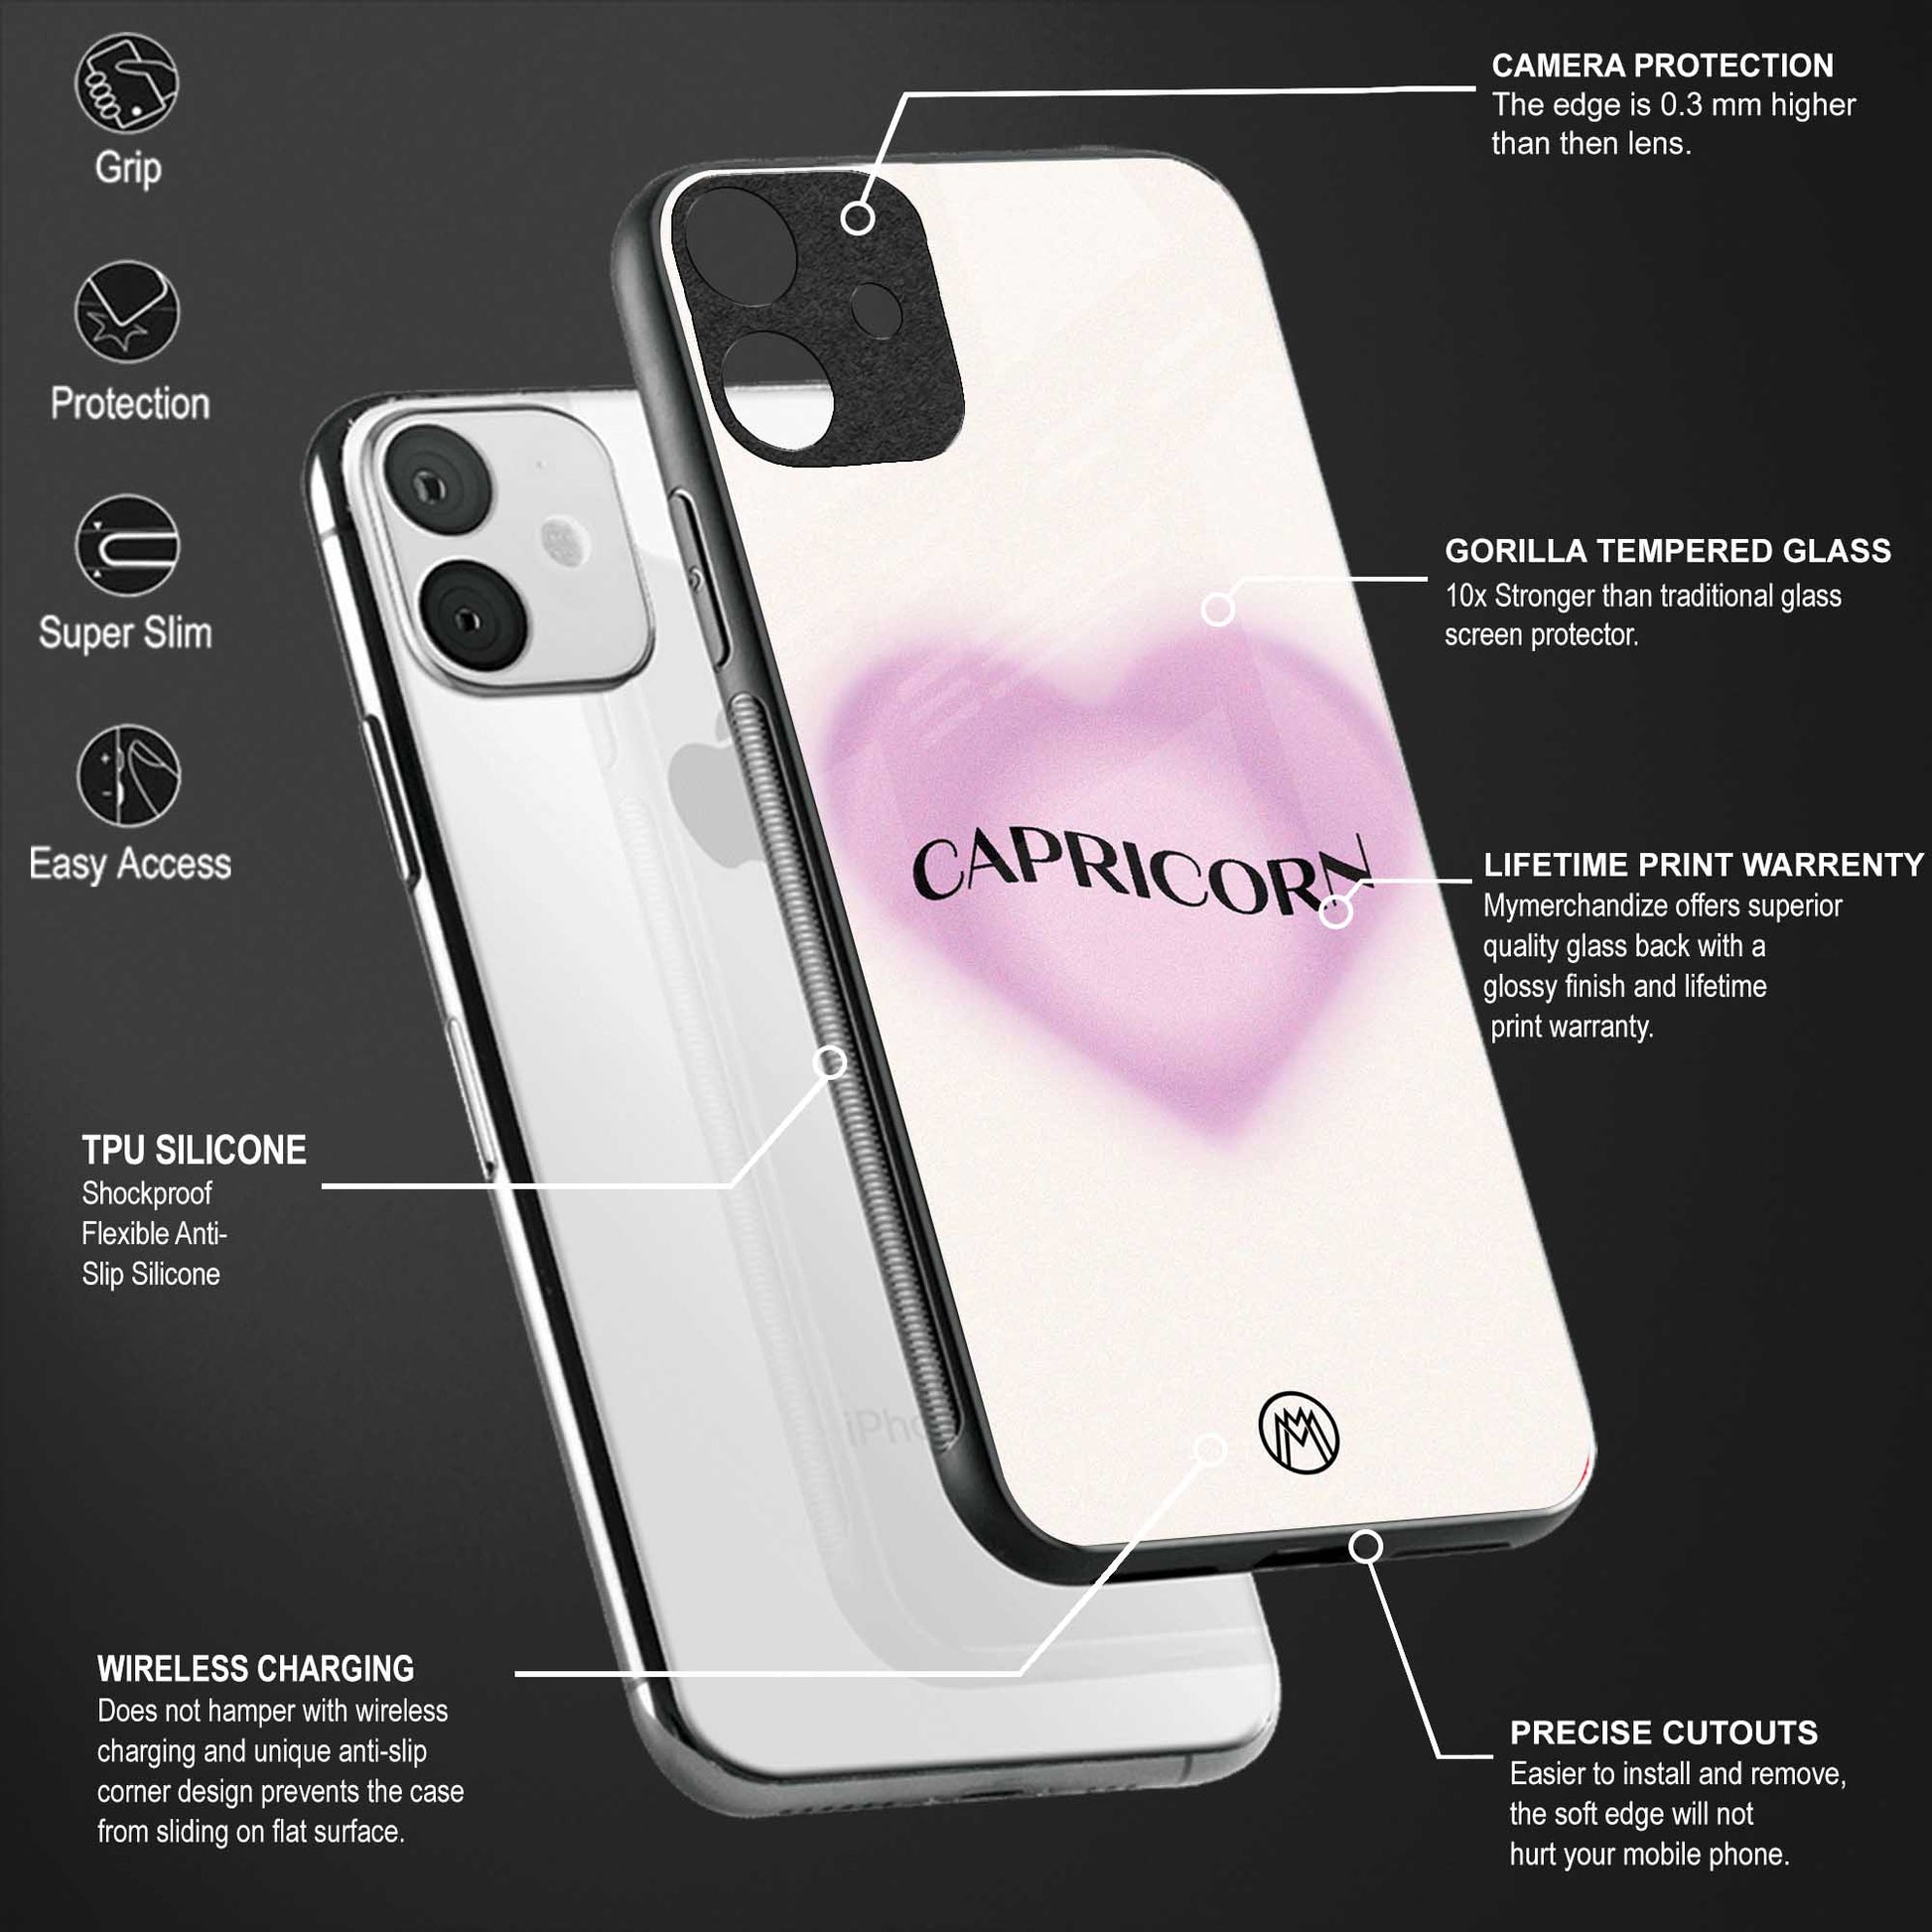 capricorn minimalistic back phone cover | glass case for vivo y16